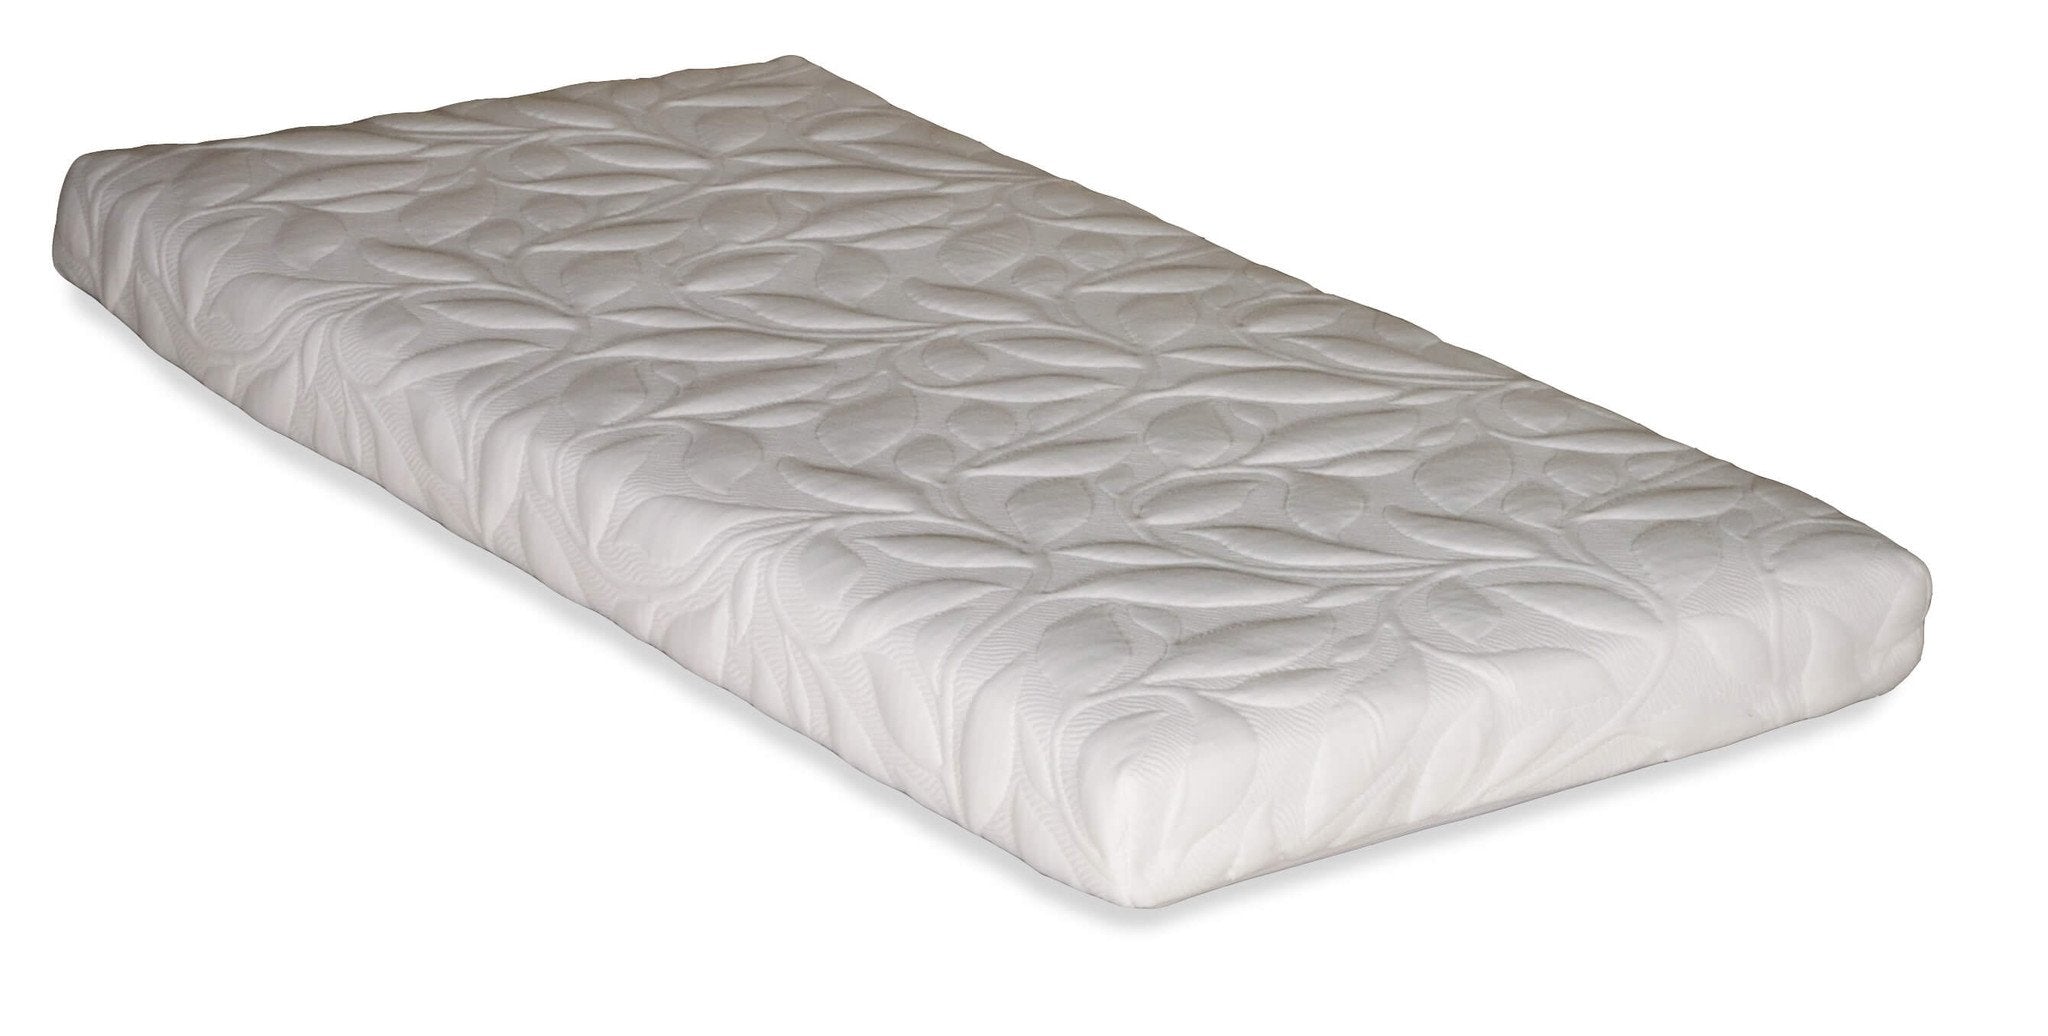 foam cot mattress kmart australia